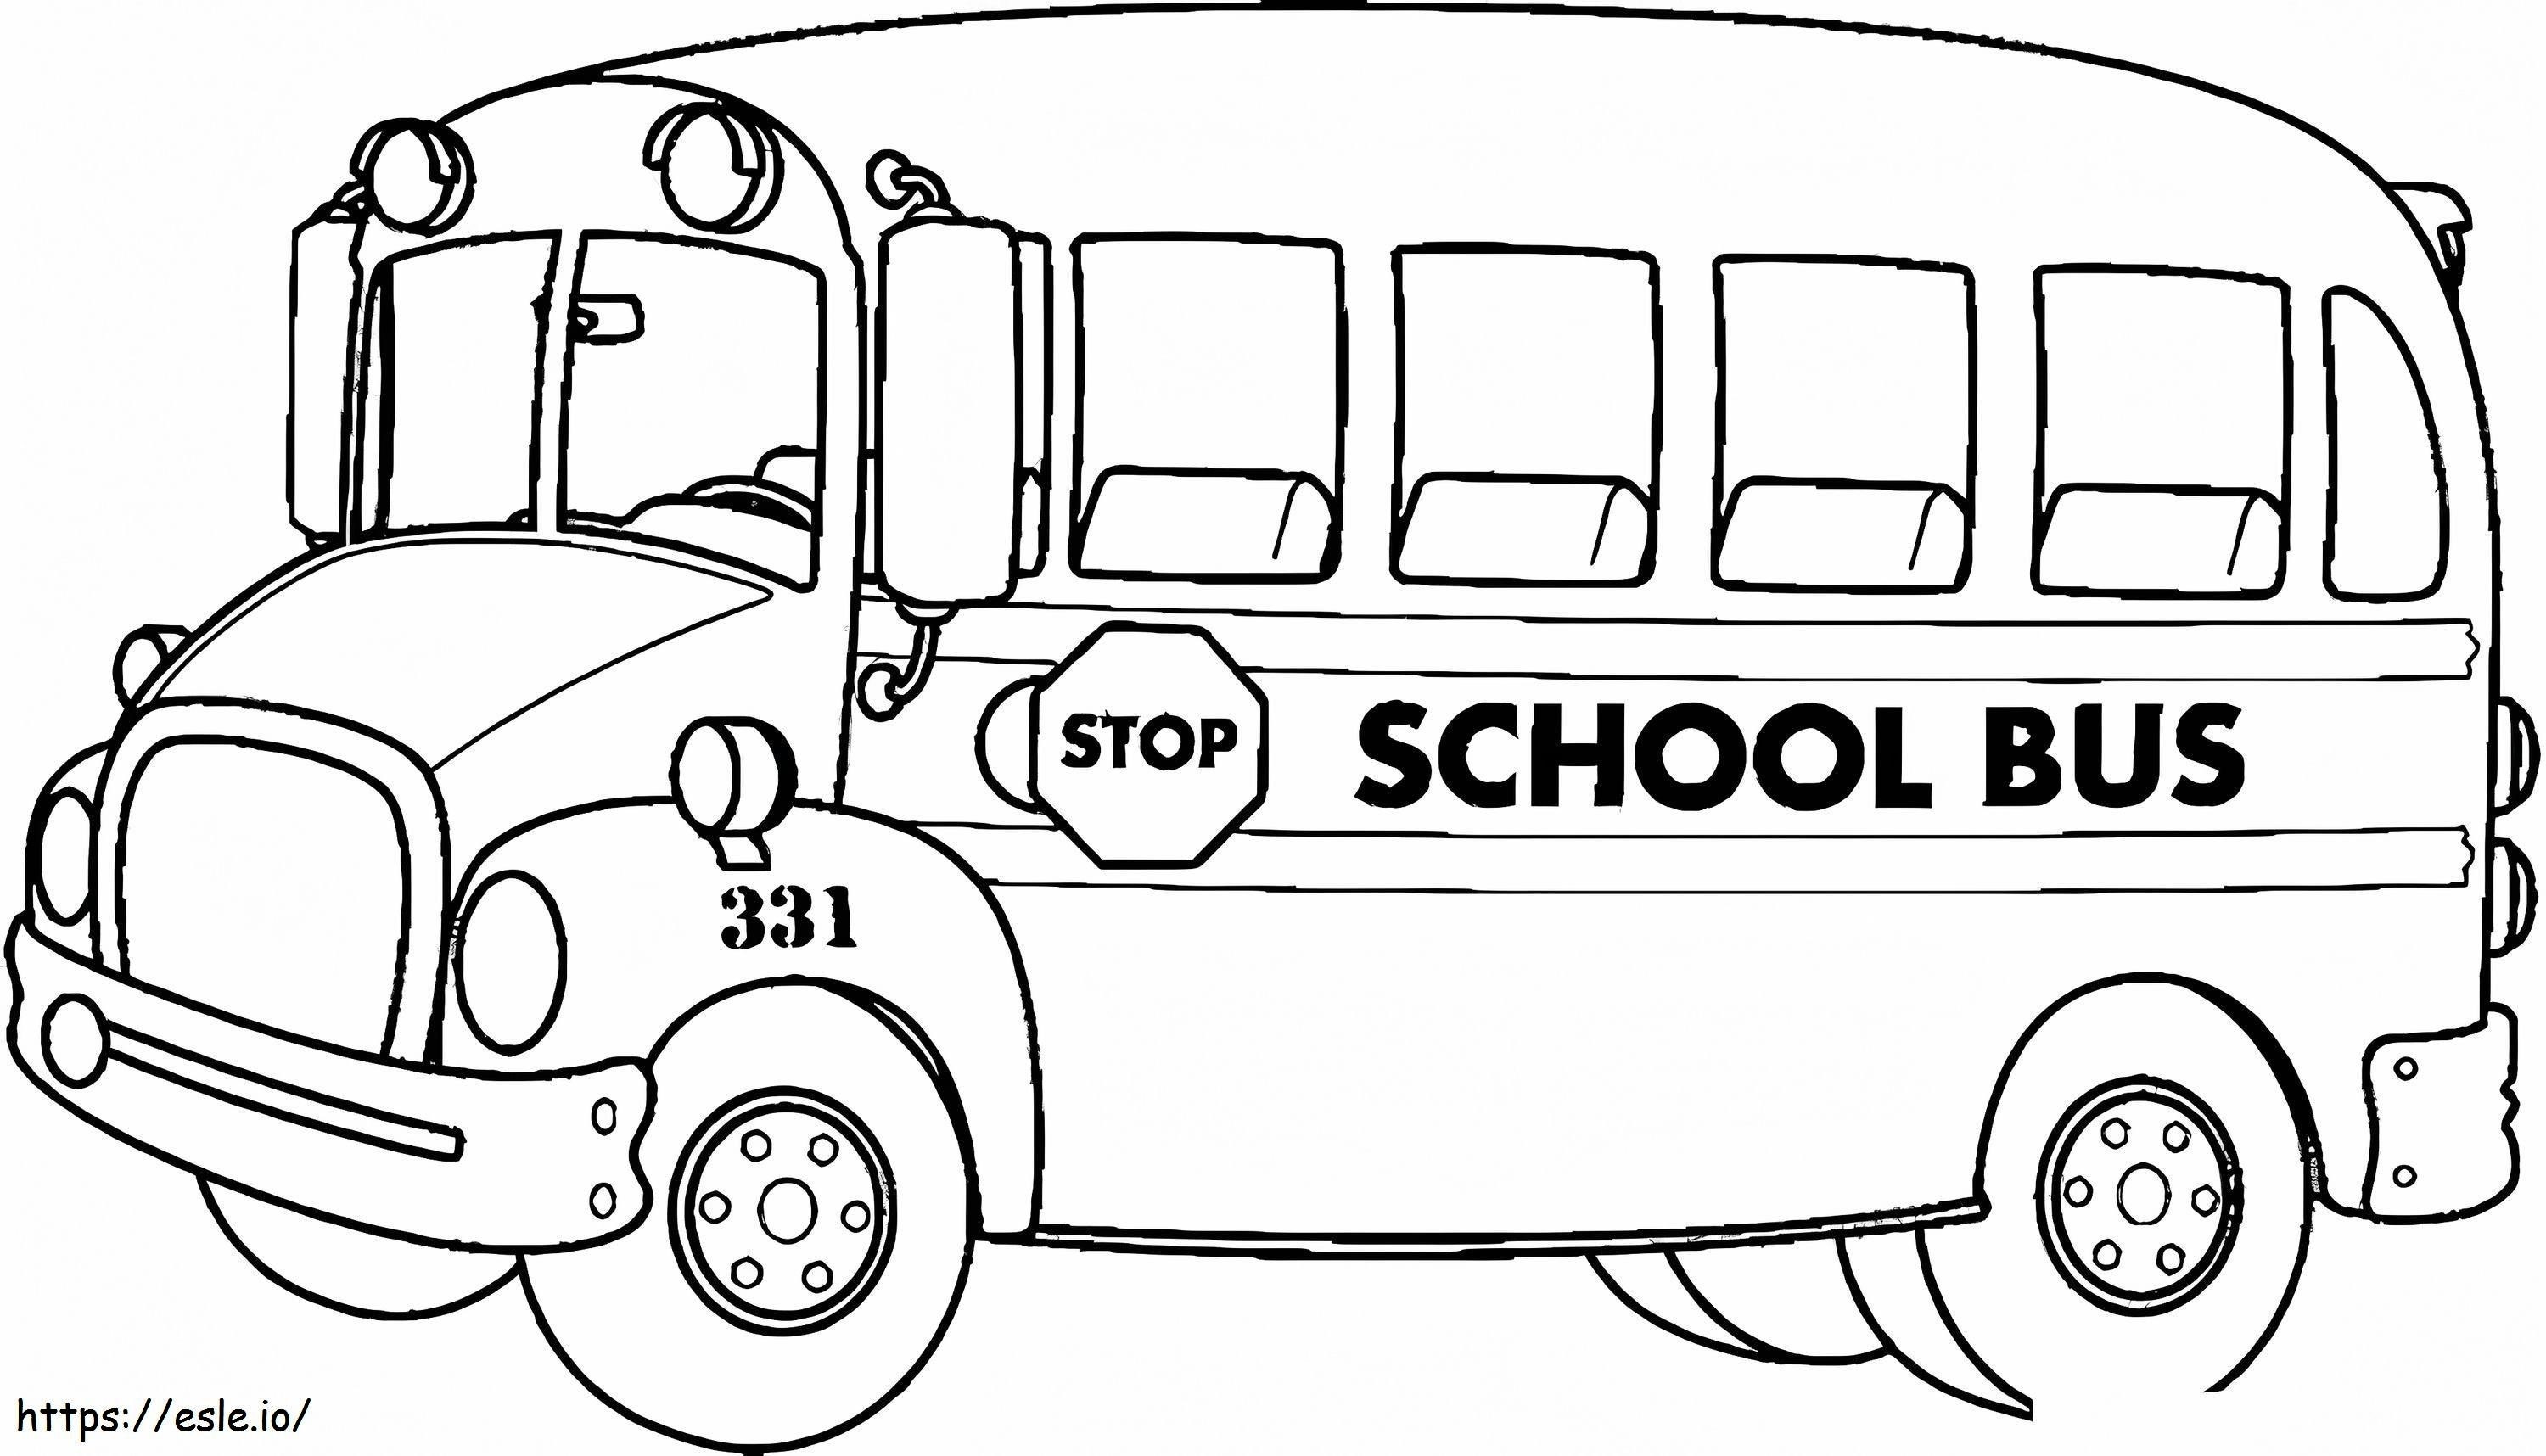 Normalny autobus szkolny kolorowanka